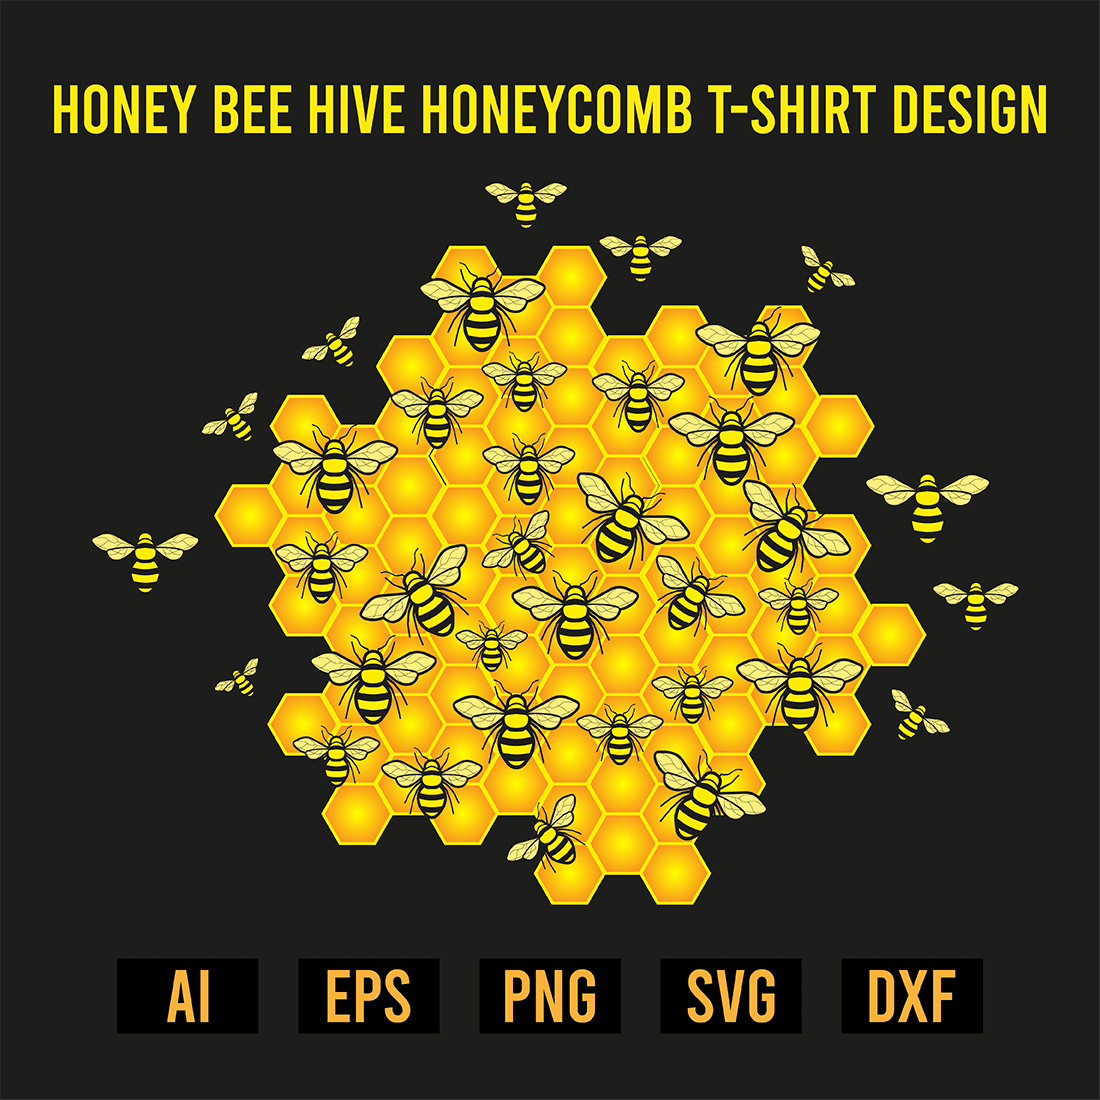 Honey Bee Hive Honeycomb T- Shirt Design cover image.